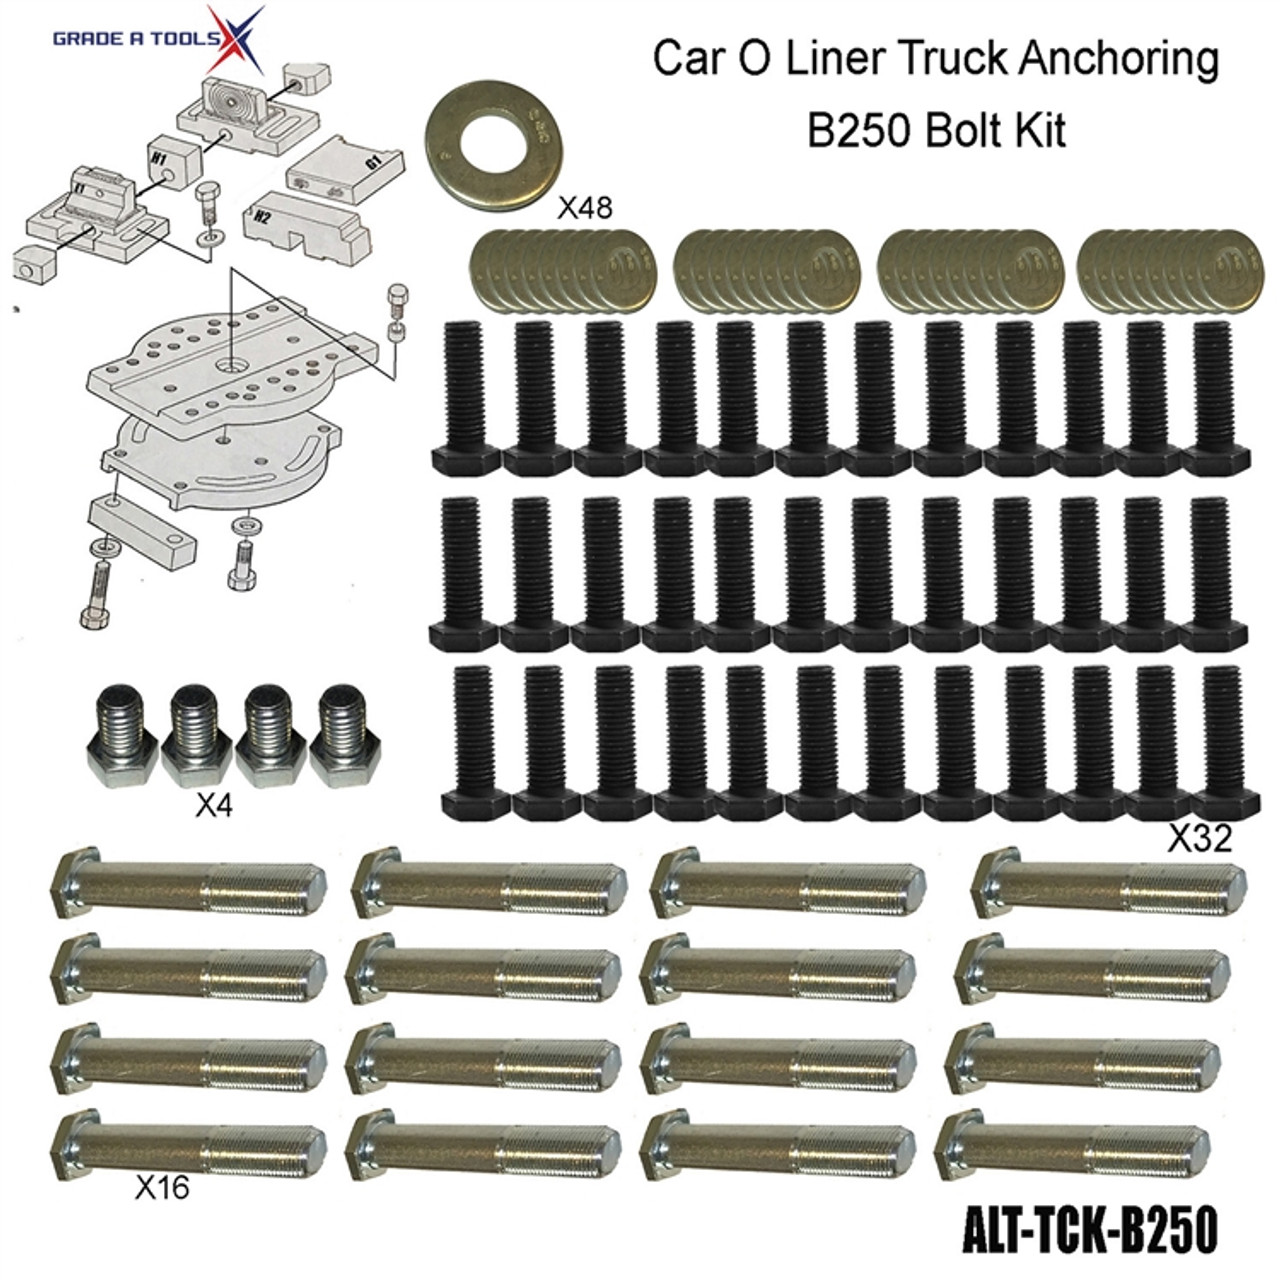 Car O Liner Truck Anchoring Clamp bolt Kit - B250